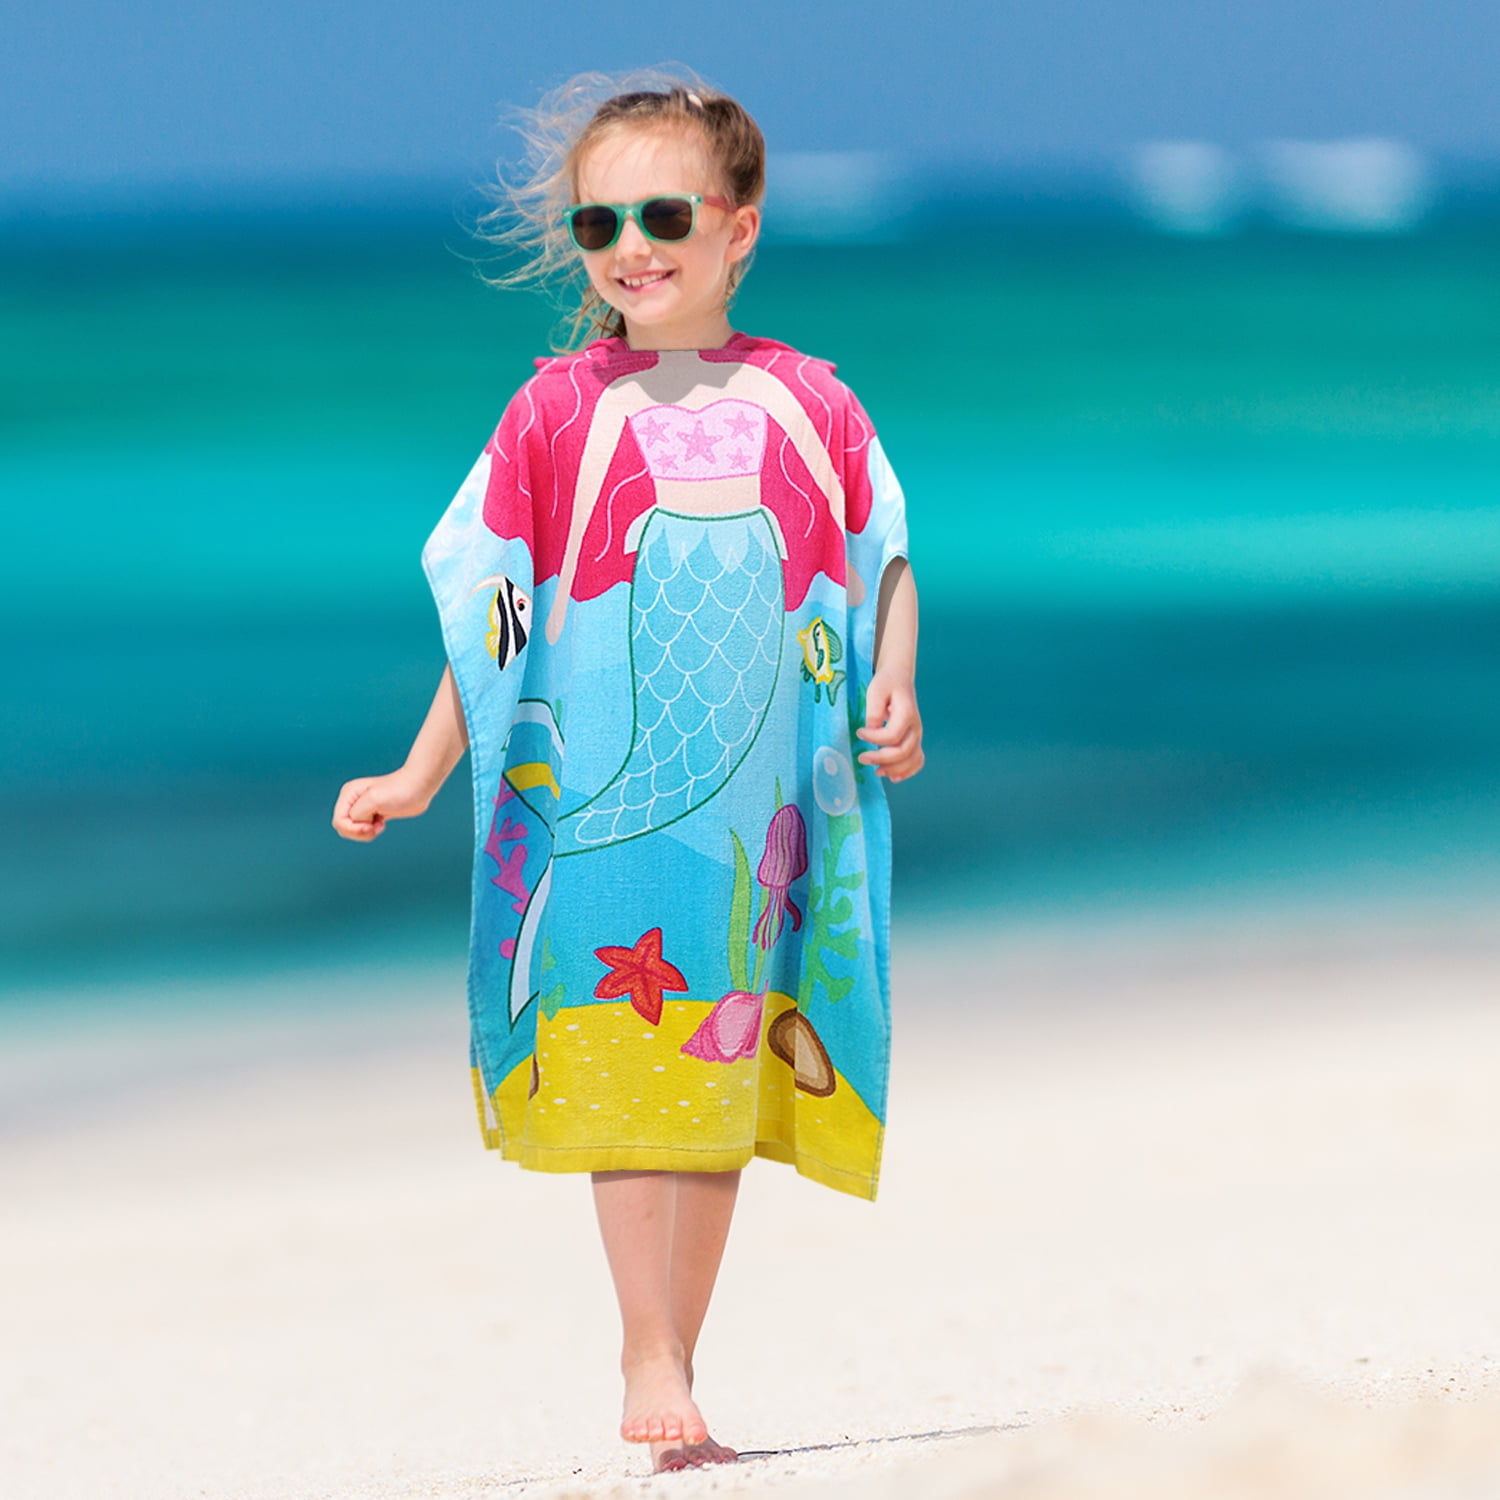 HZAMING Kids Hooded Beach Bath Towel 100% Cotton Children Swim Cover-Ups Super Soft Mermaid Brown Hair 